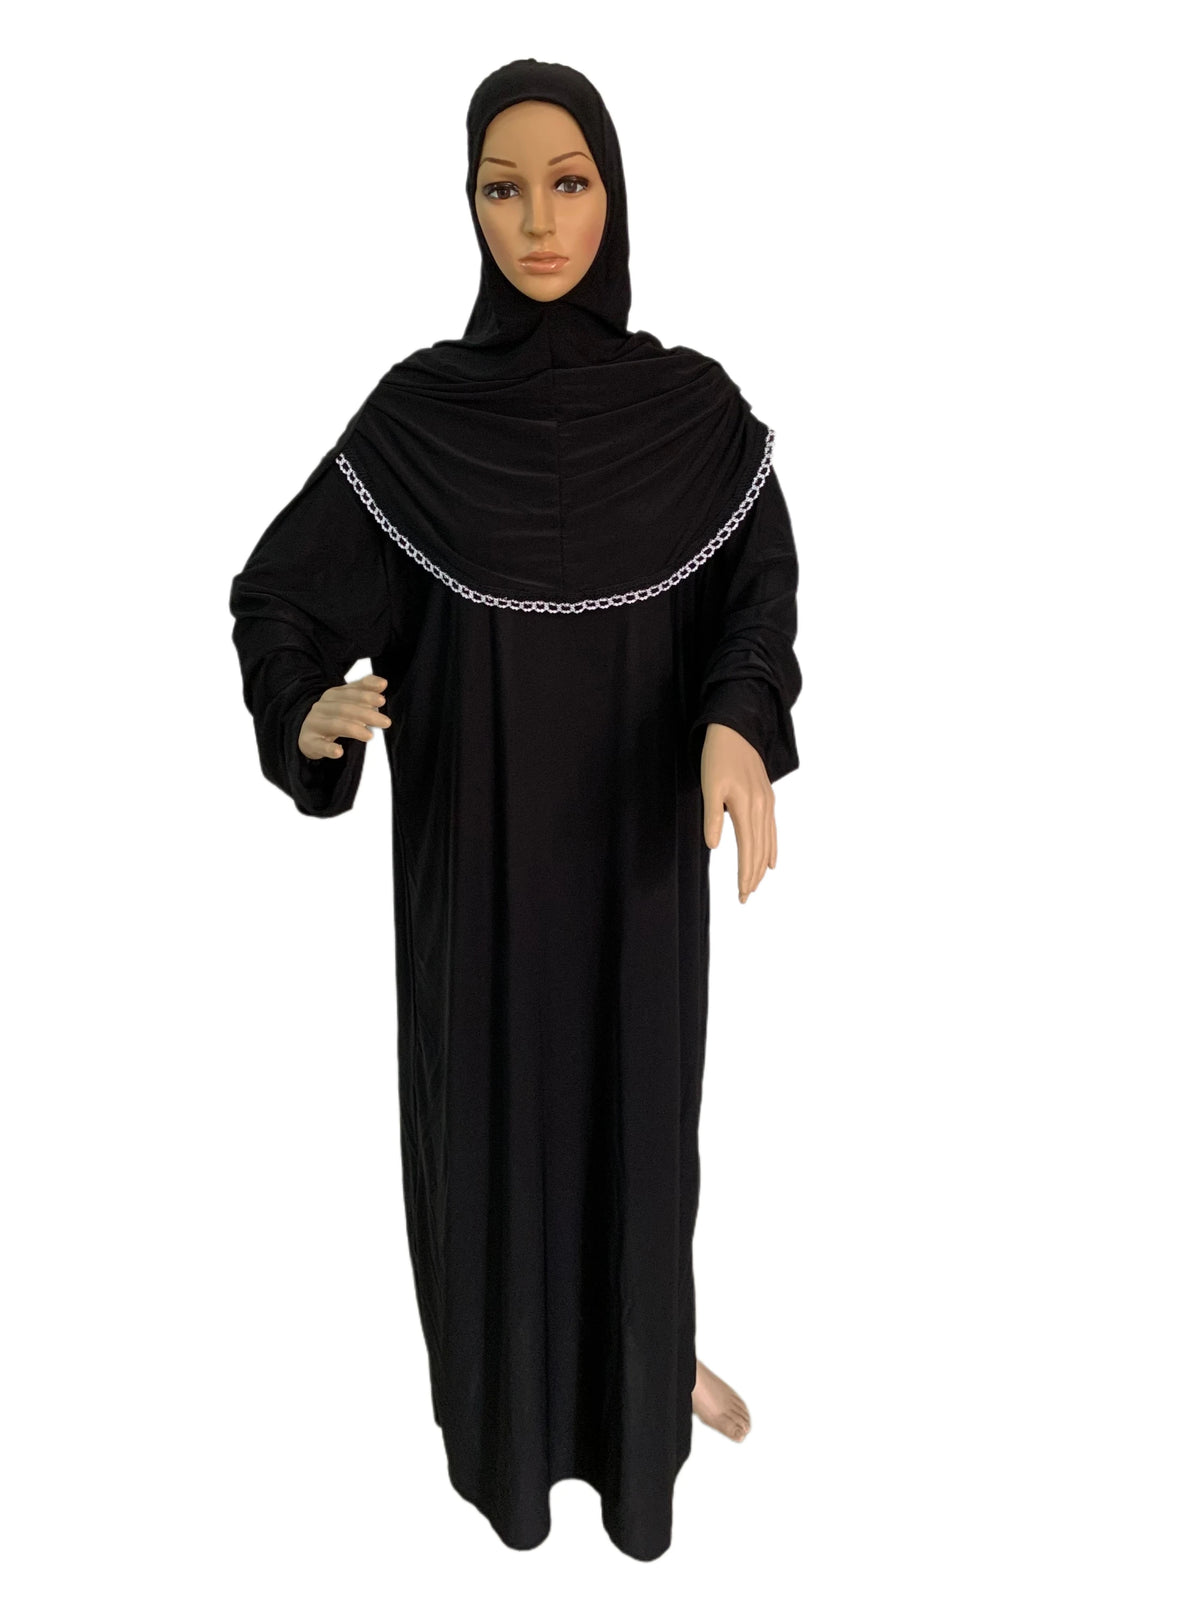 H118 Free size muslim dress with attached hijab pray khimar kaftan  burqa abaya robe hijab middle east clothing